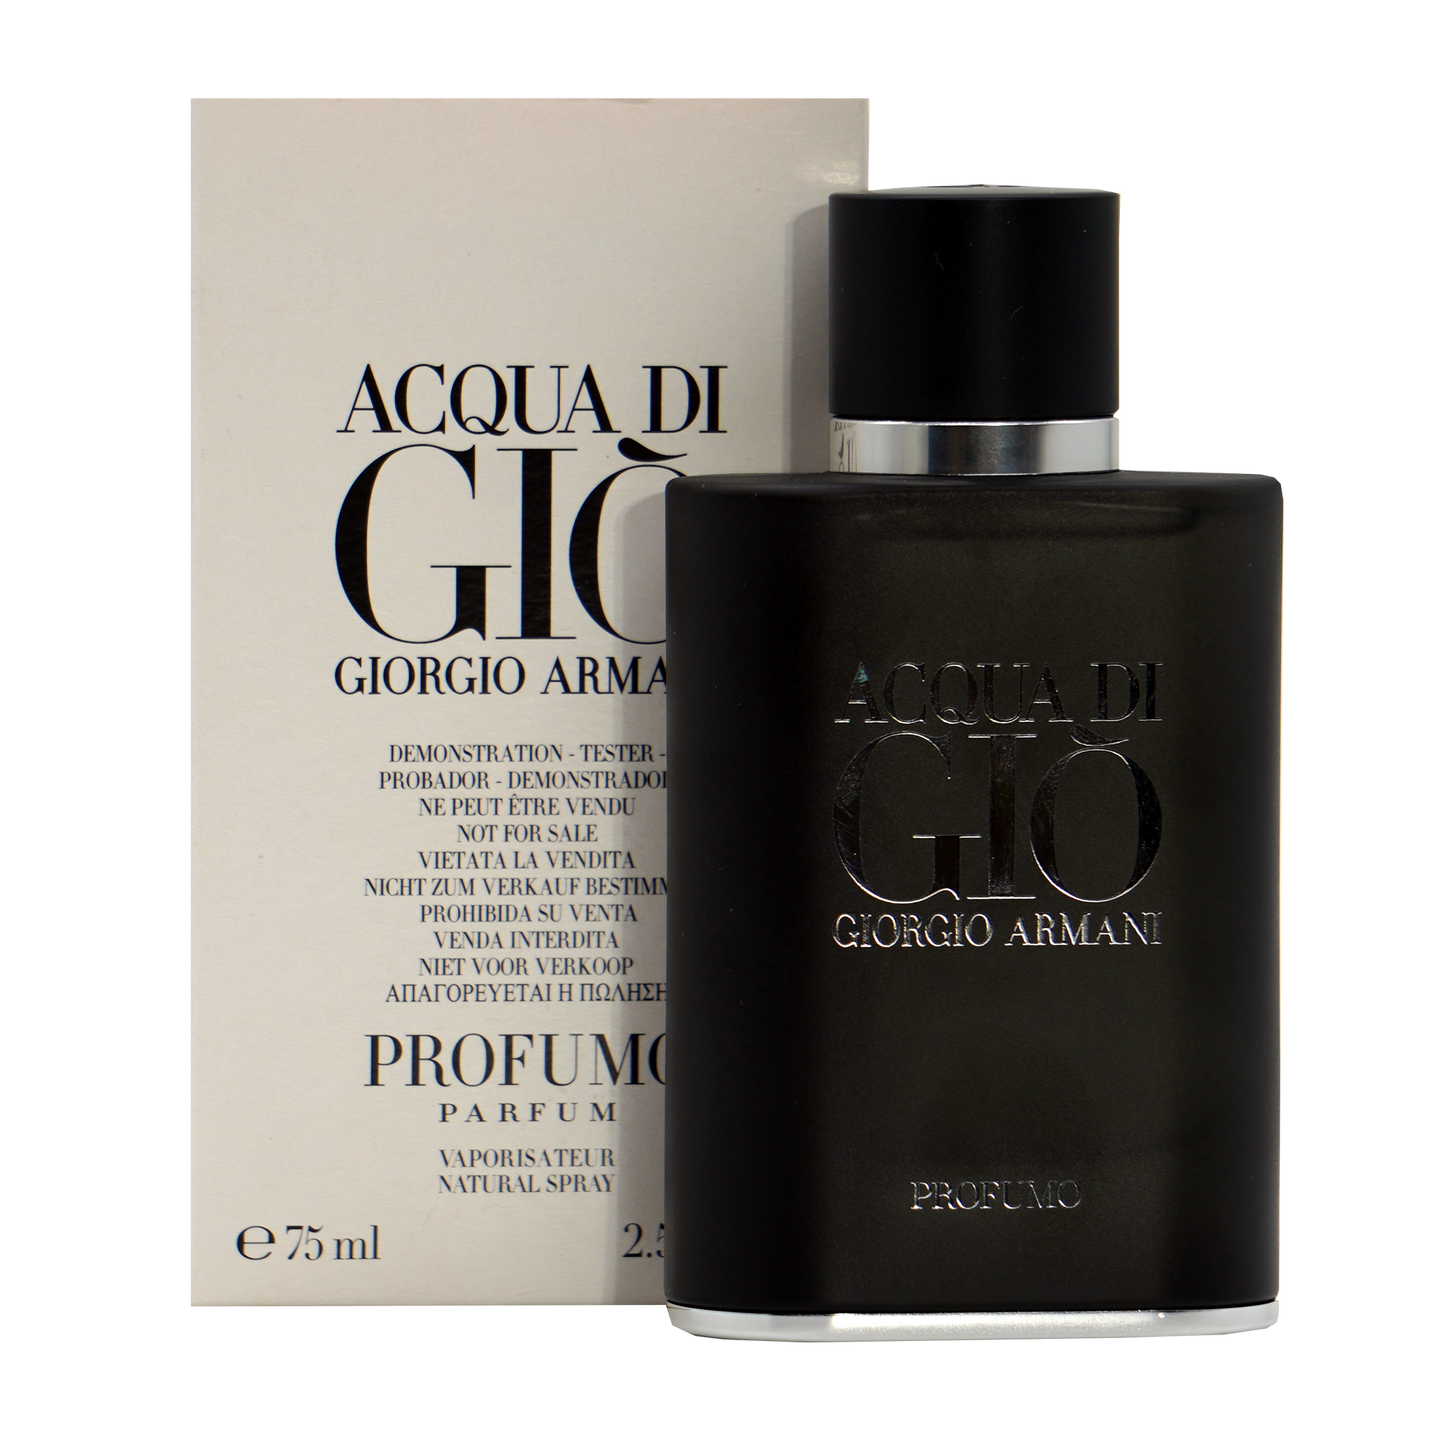 Acqua Di Gio Profumo - Giorgio Armani - 2.5 oz - Eau de Parfum - Tester - 3614270157646 - Tester